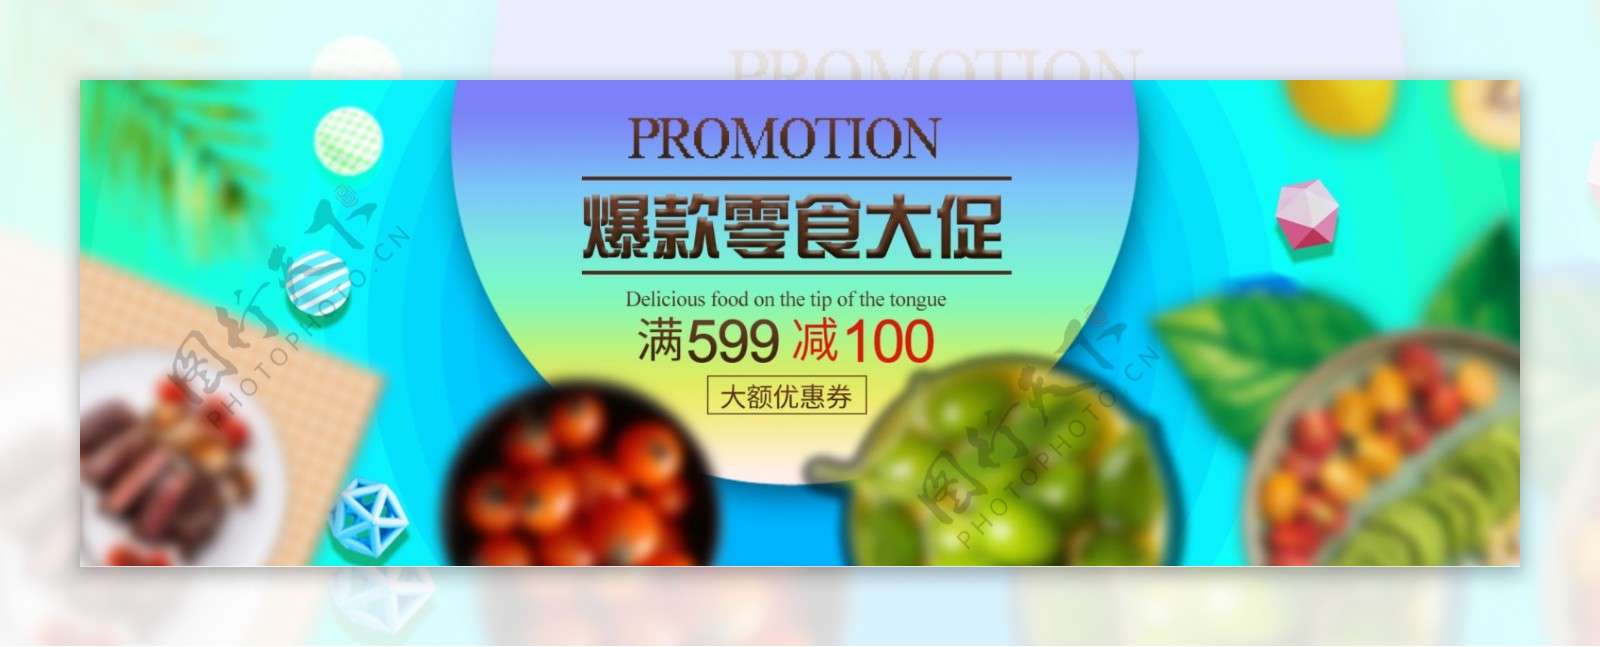 美味零食促销活动海报banner